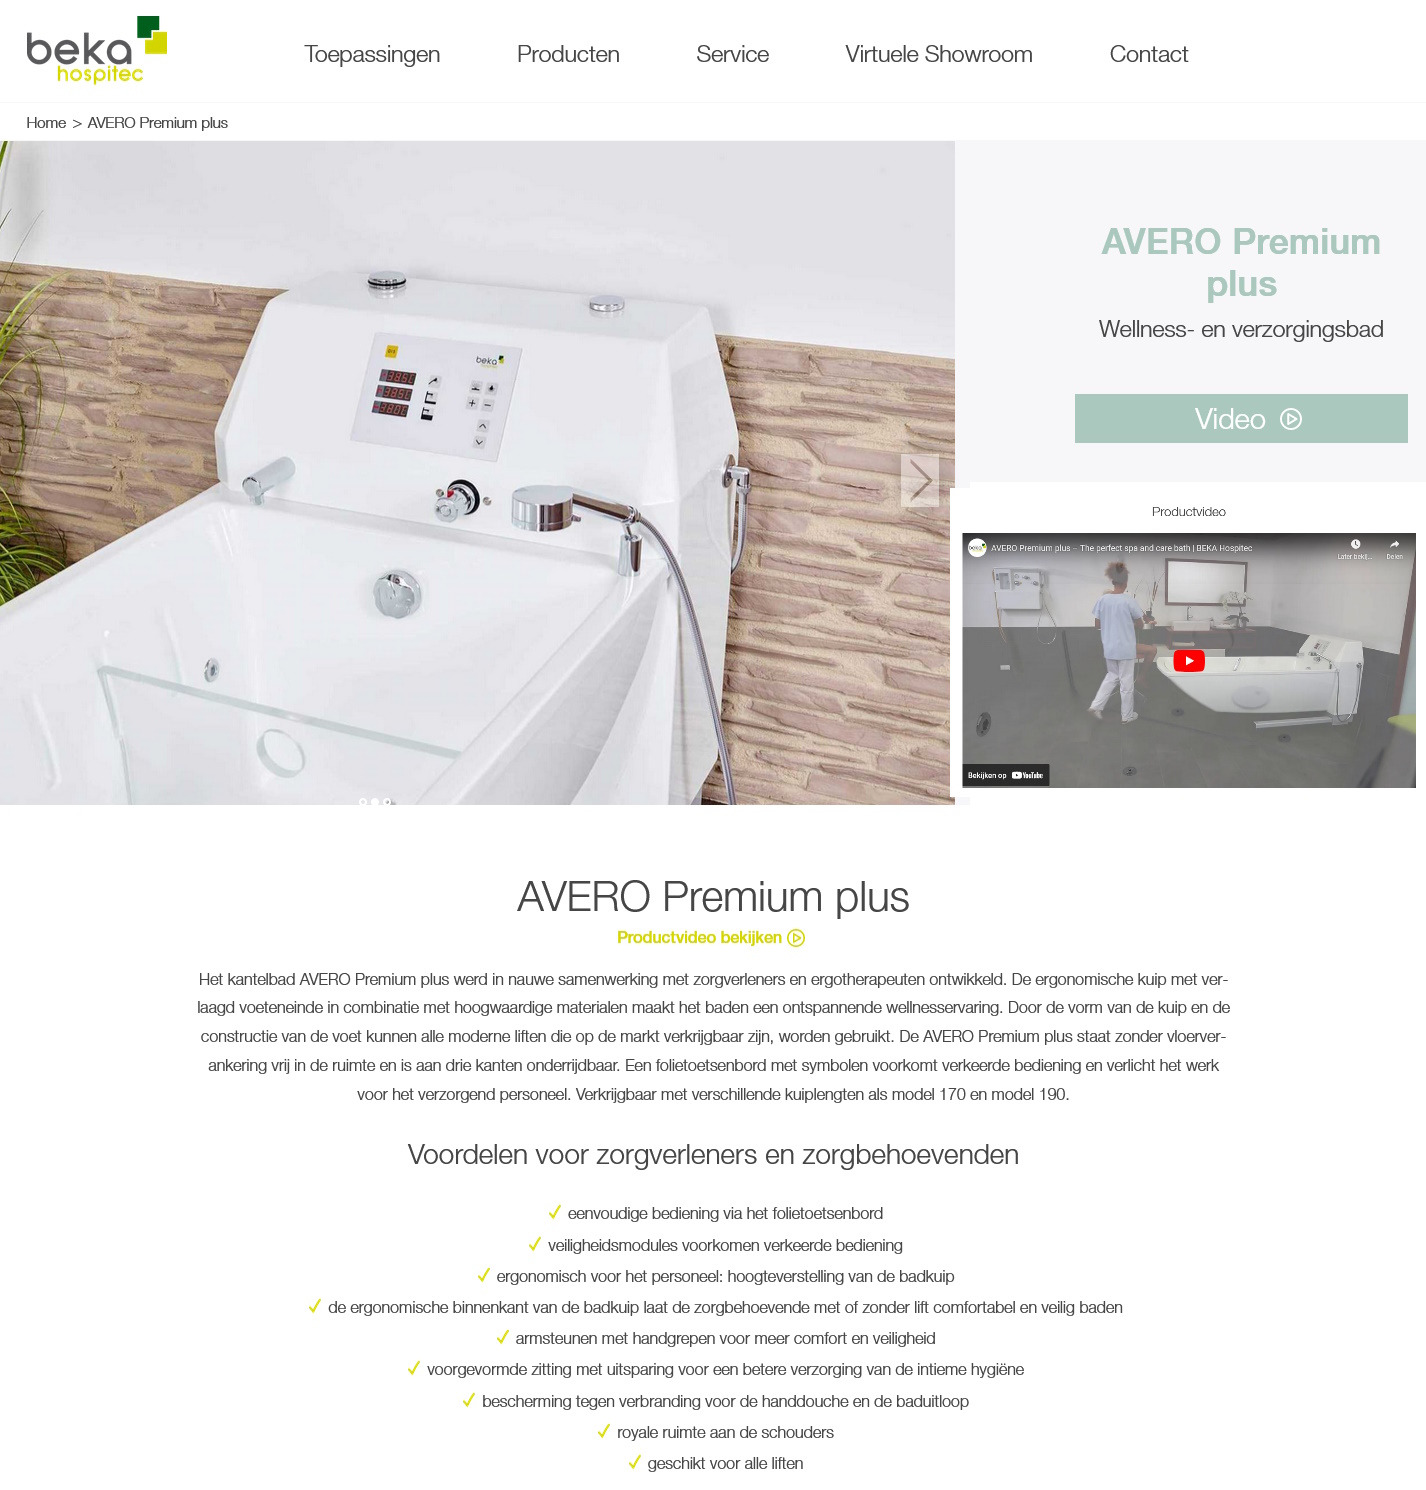 toegevoegd document 3 van Avero Premium Plus  